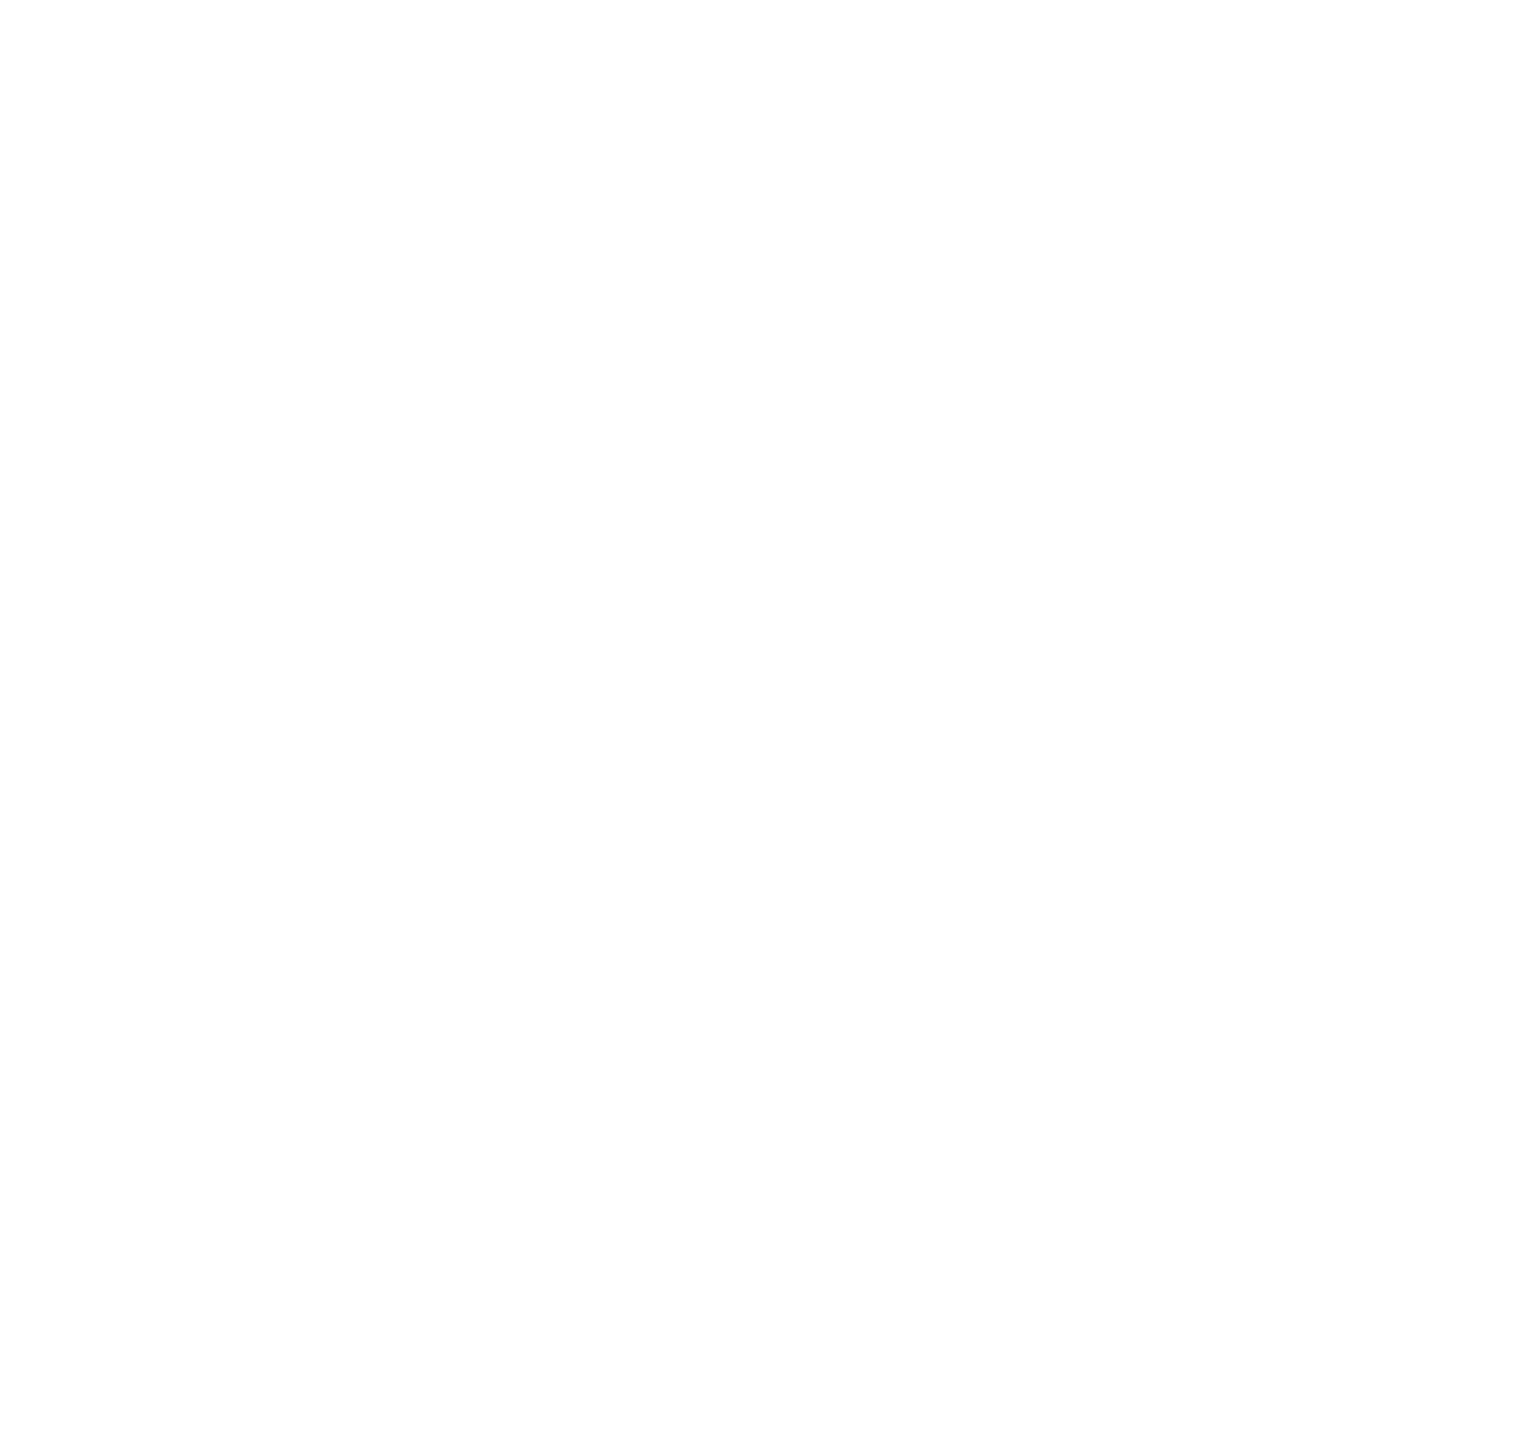 Spirit Realty Capital logo for dark backgrounds (transparent PNG)